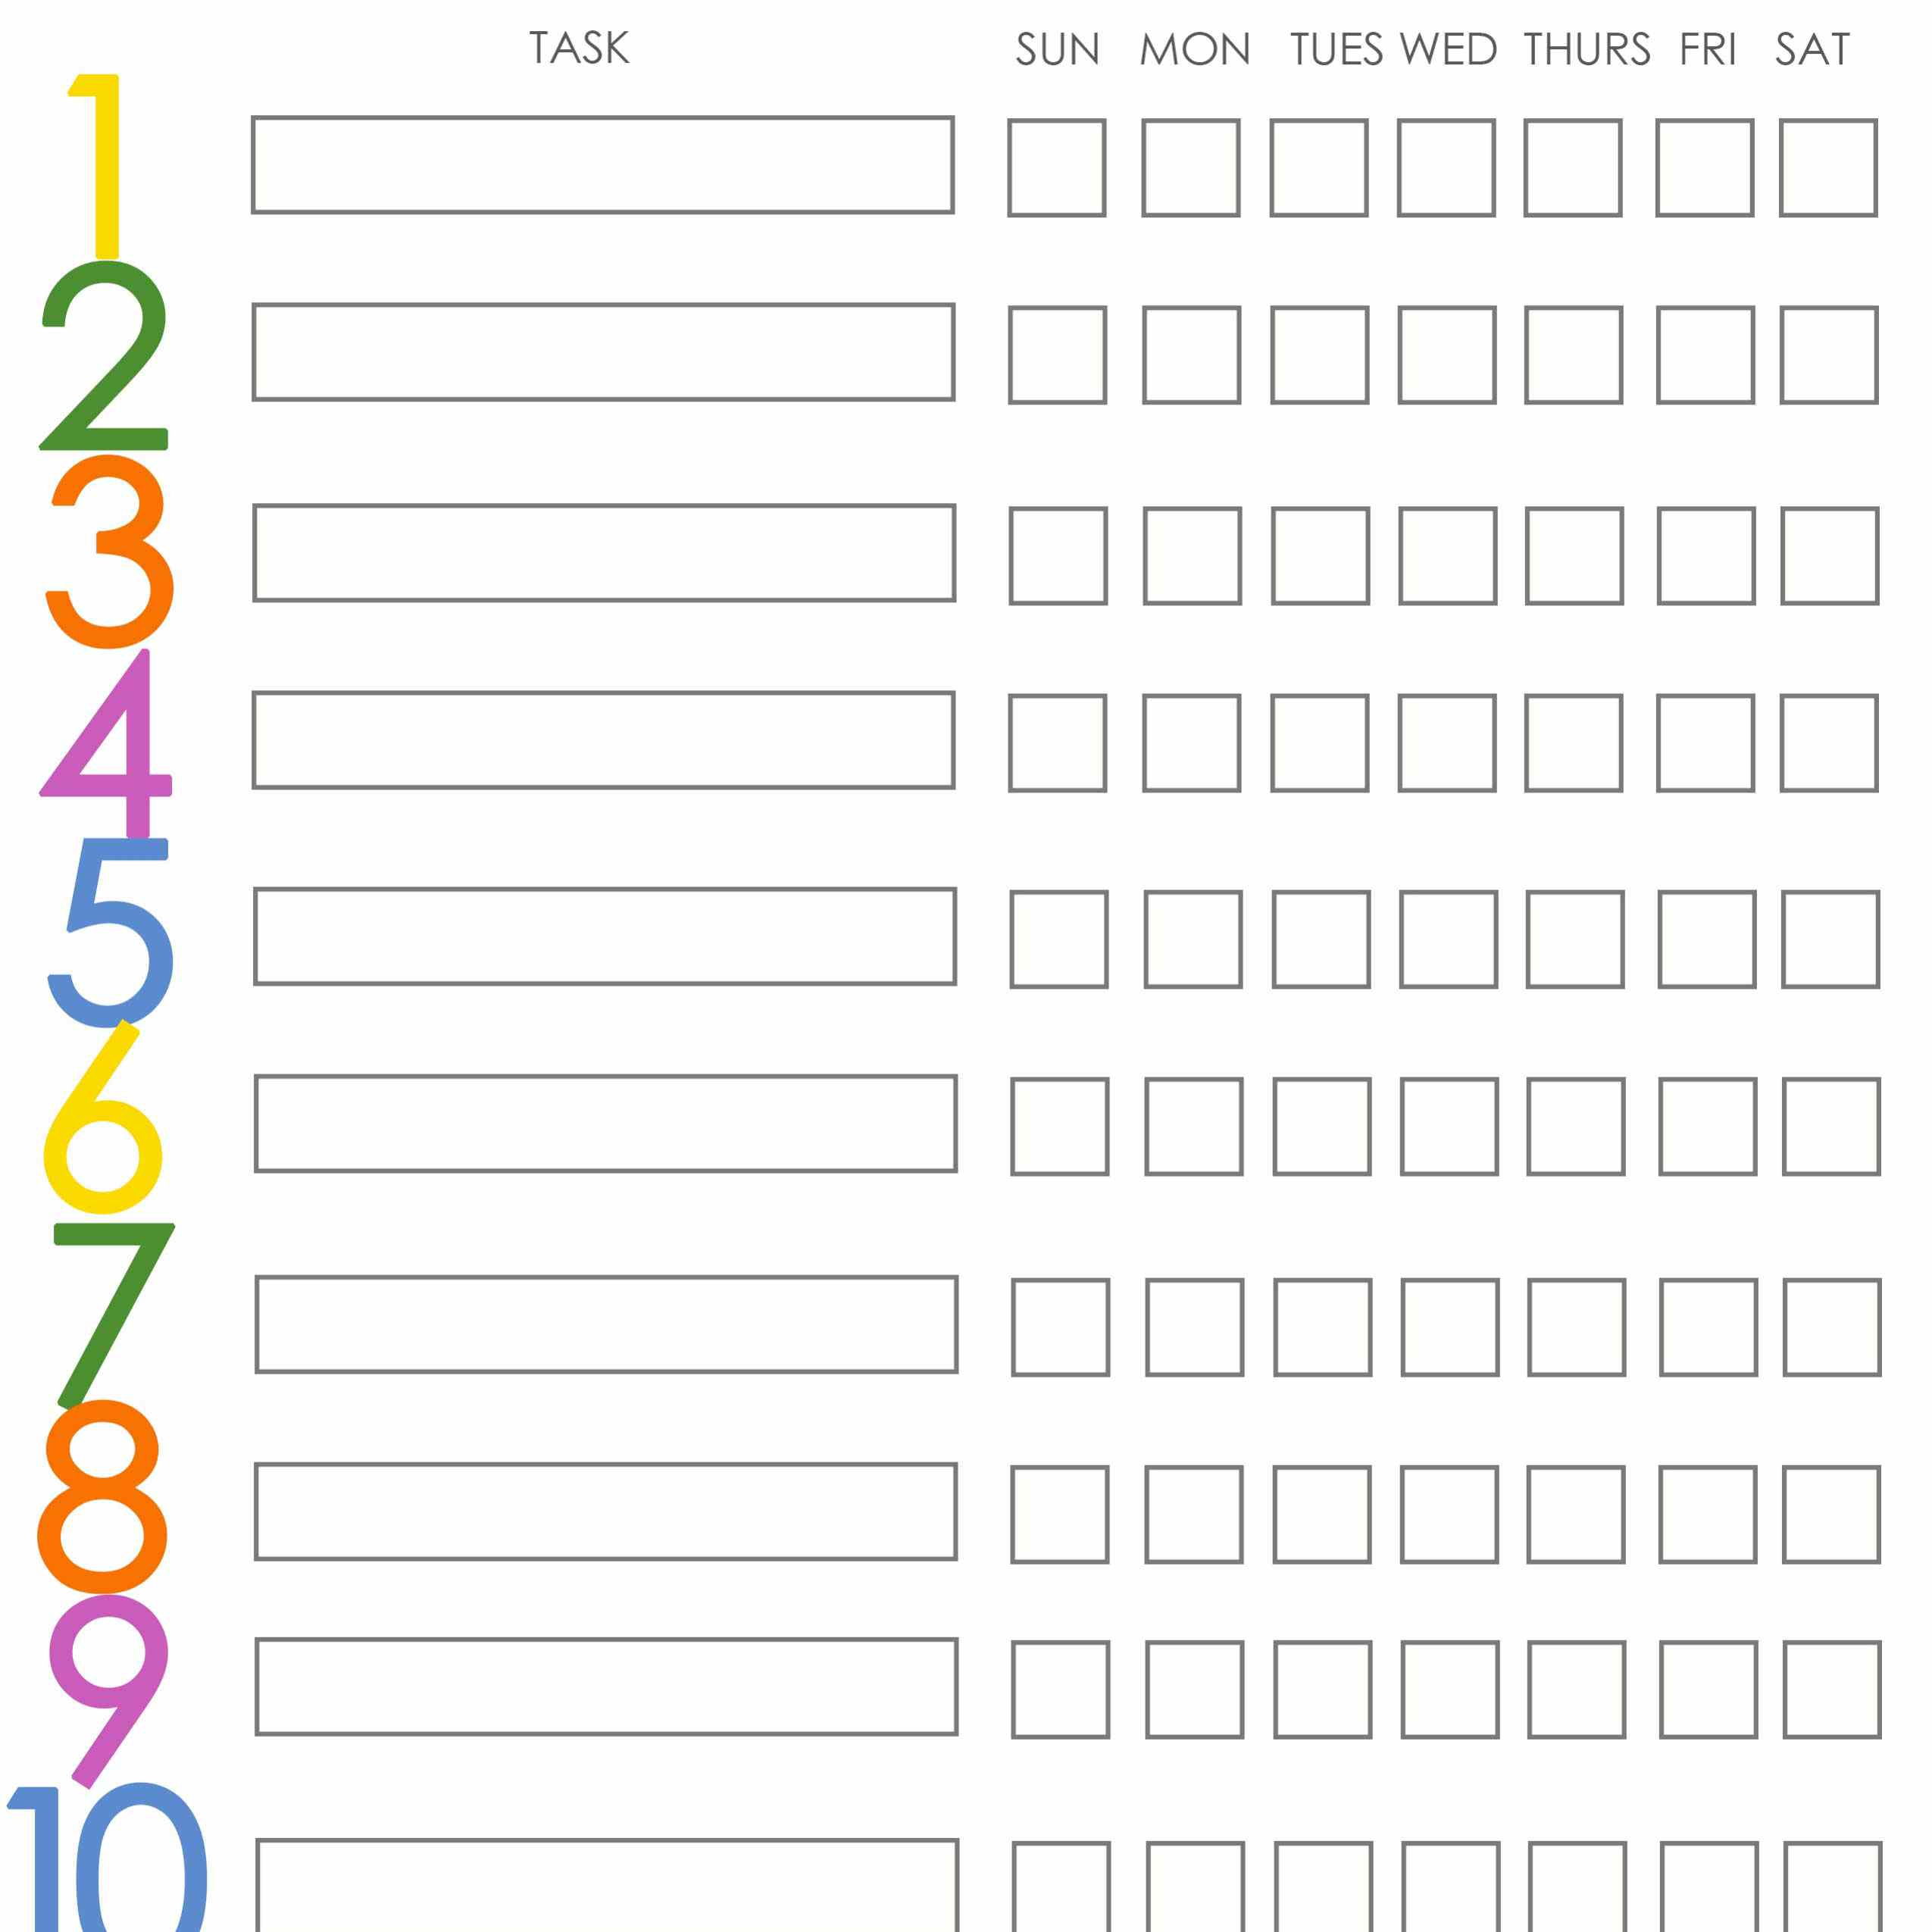 Free Printable Weekly Chore Charts - Free Printable Chore Charts For Kids